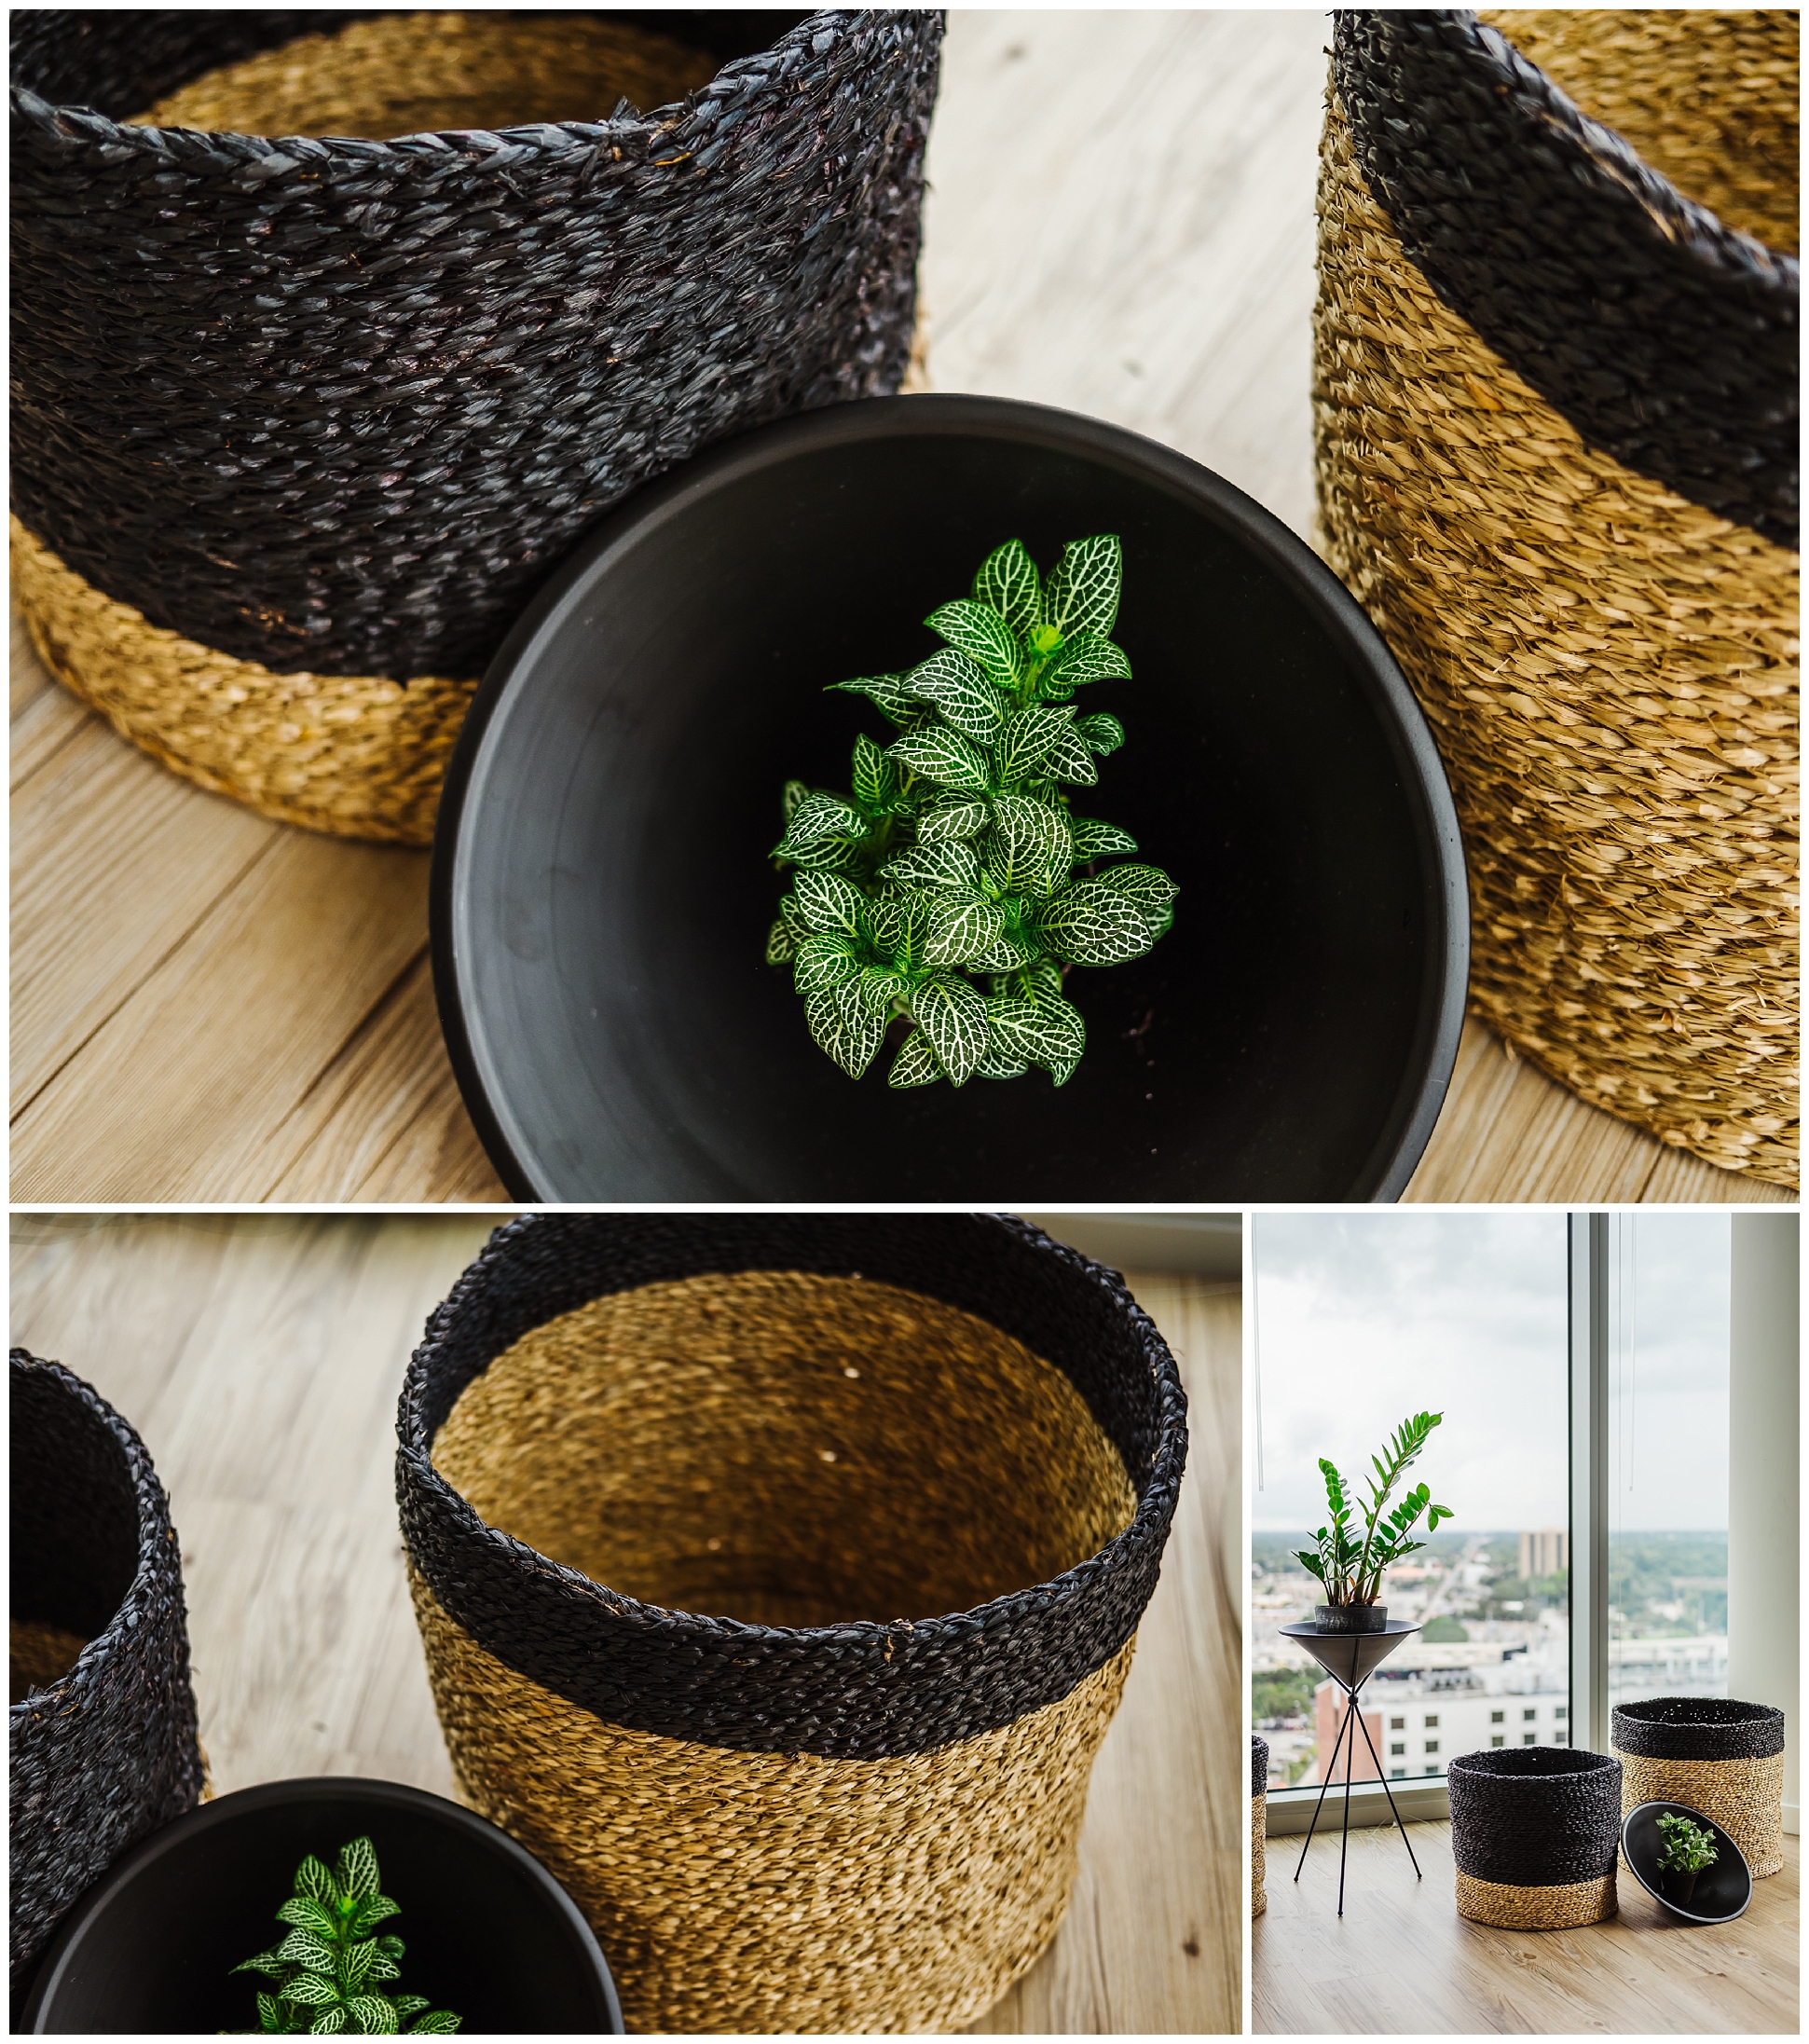 ann-cox-design-planter-accessories-tampa-interior_0016.jpg